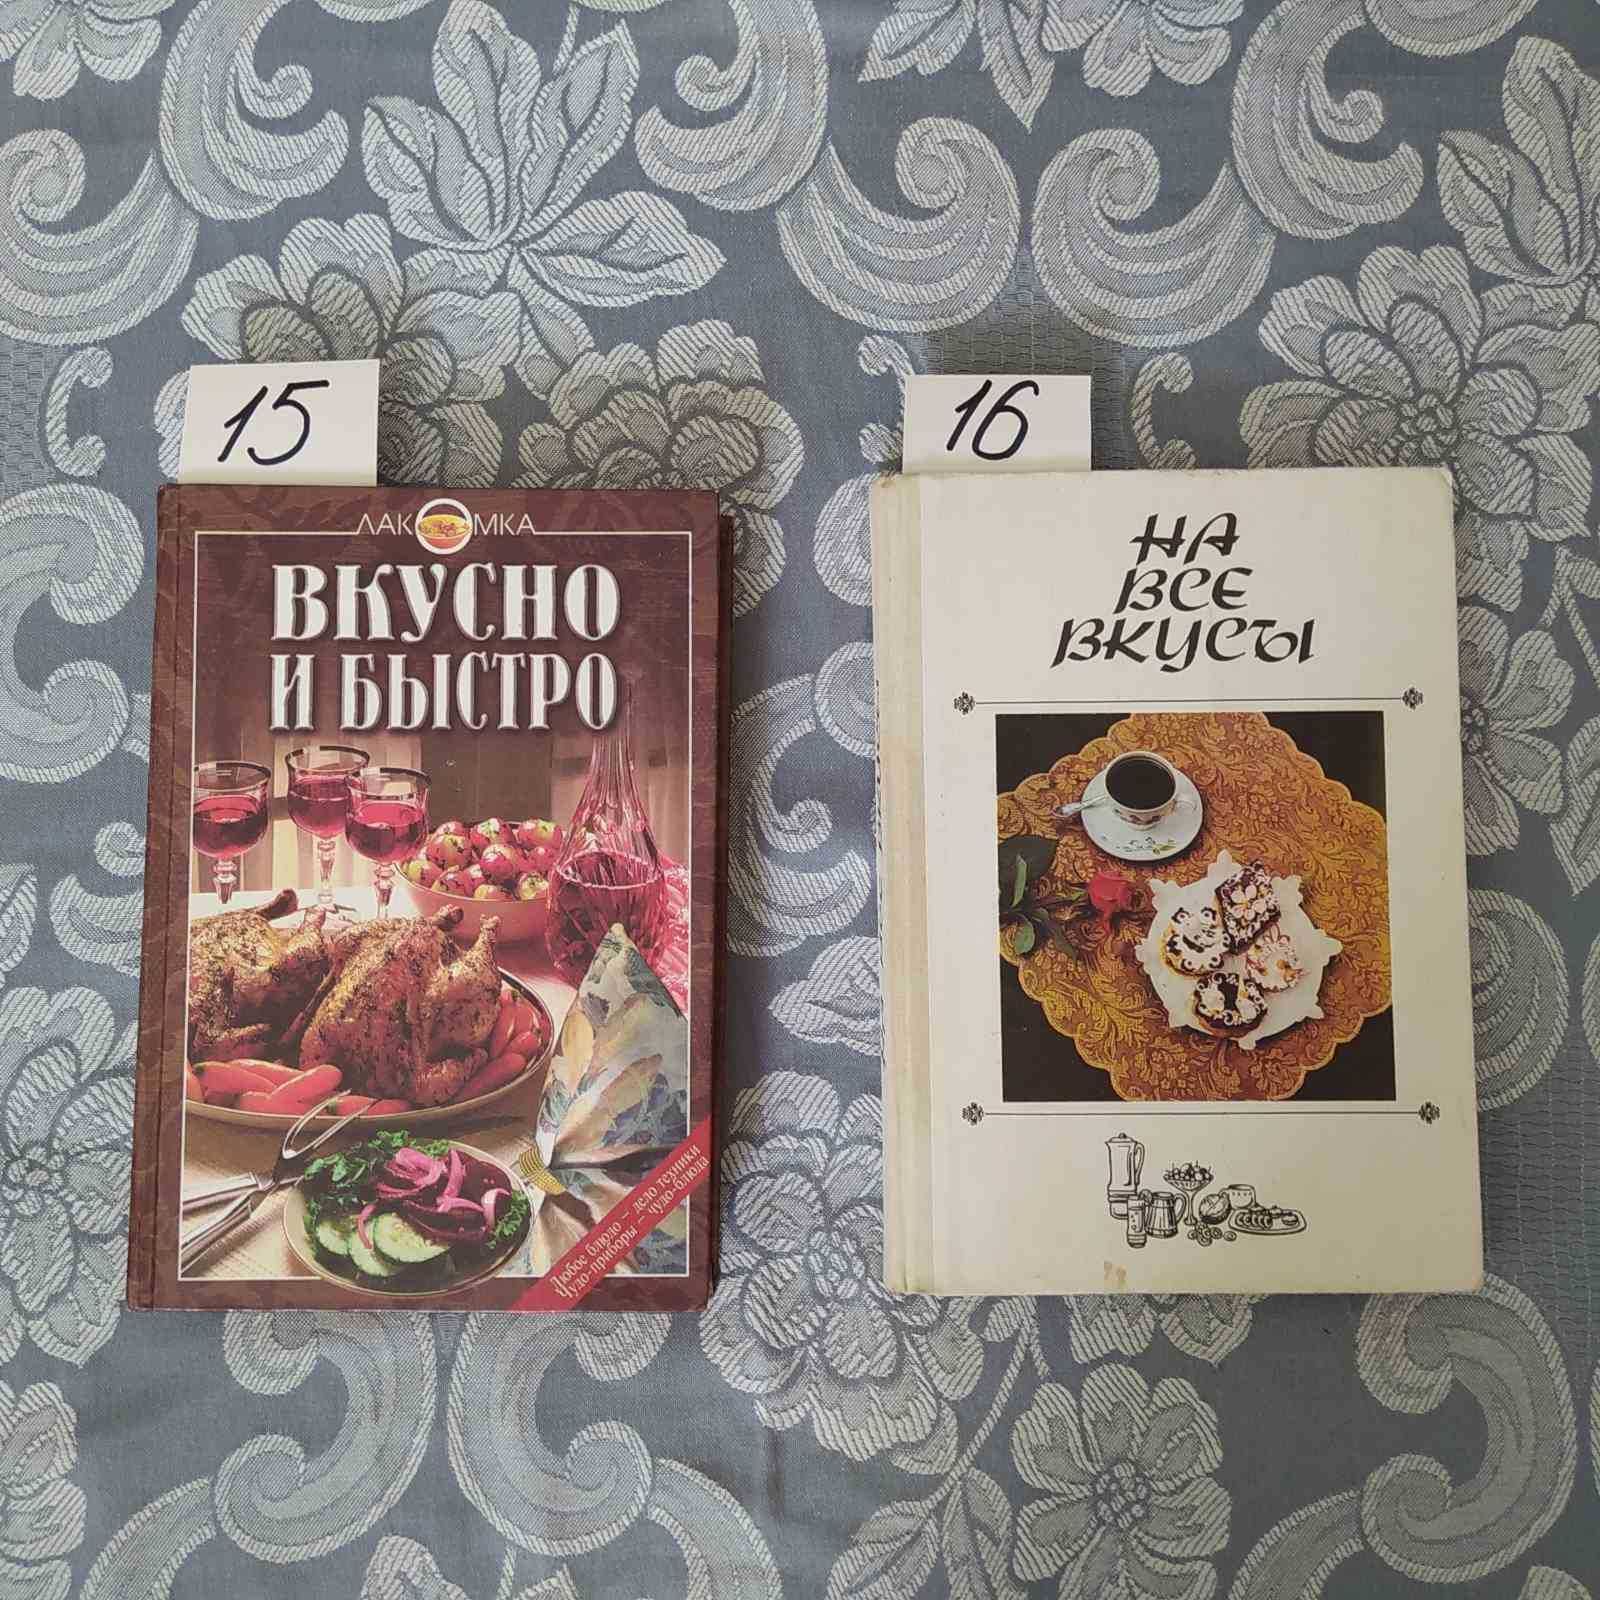 Книги по кулинарии, выпечке.